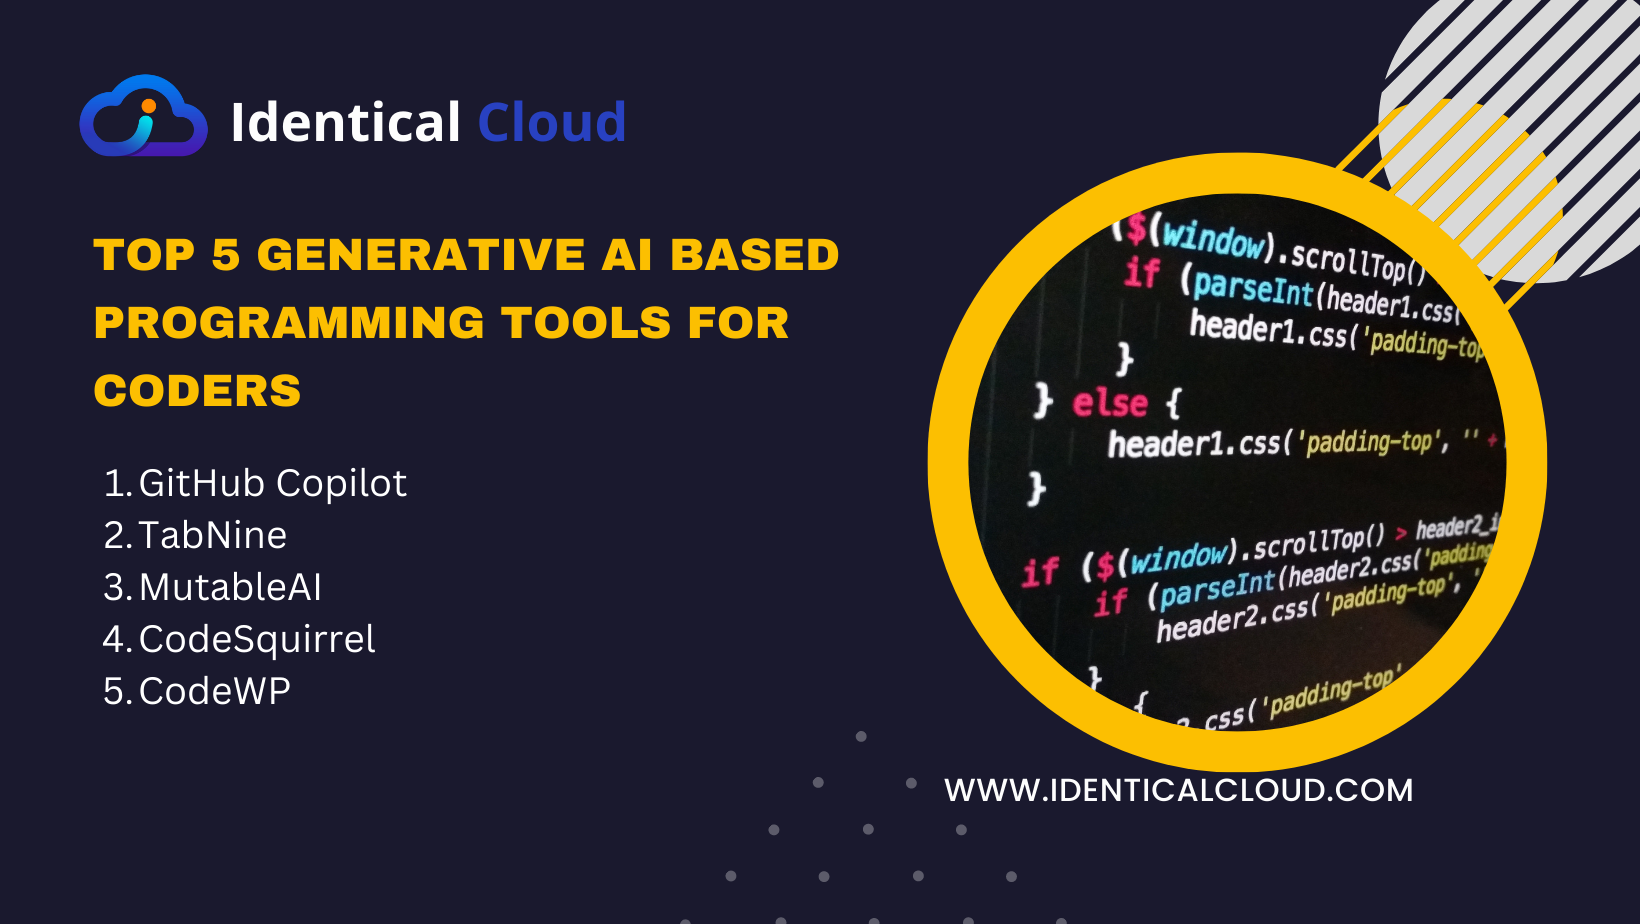 Top 5 Generative AI based programming tools for coders - identicalcloud.com